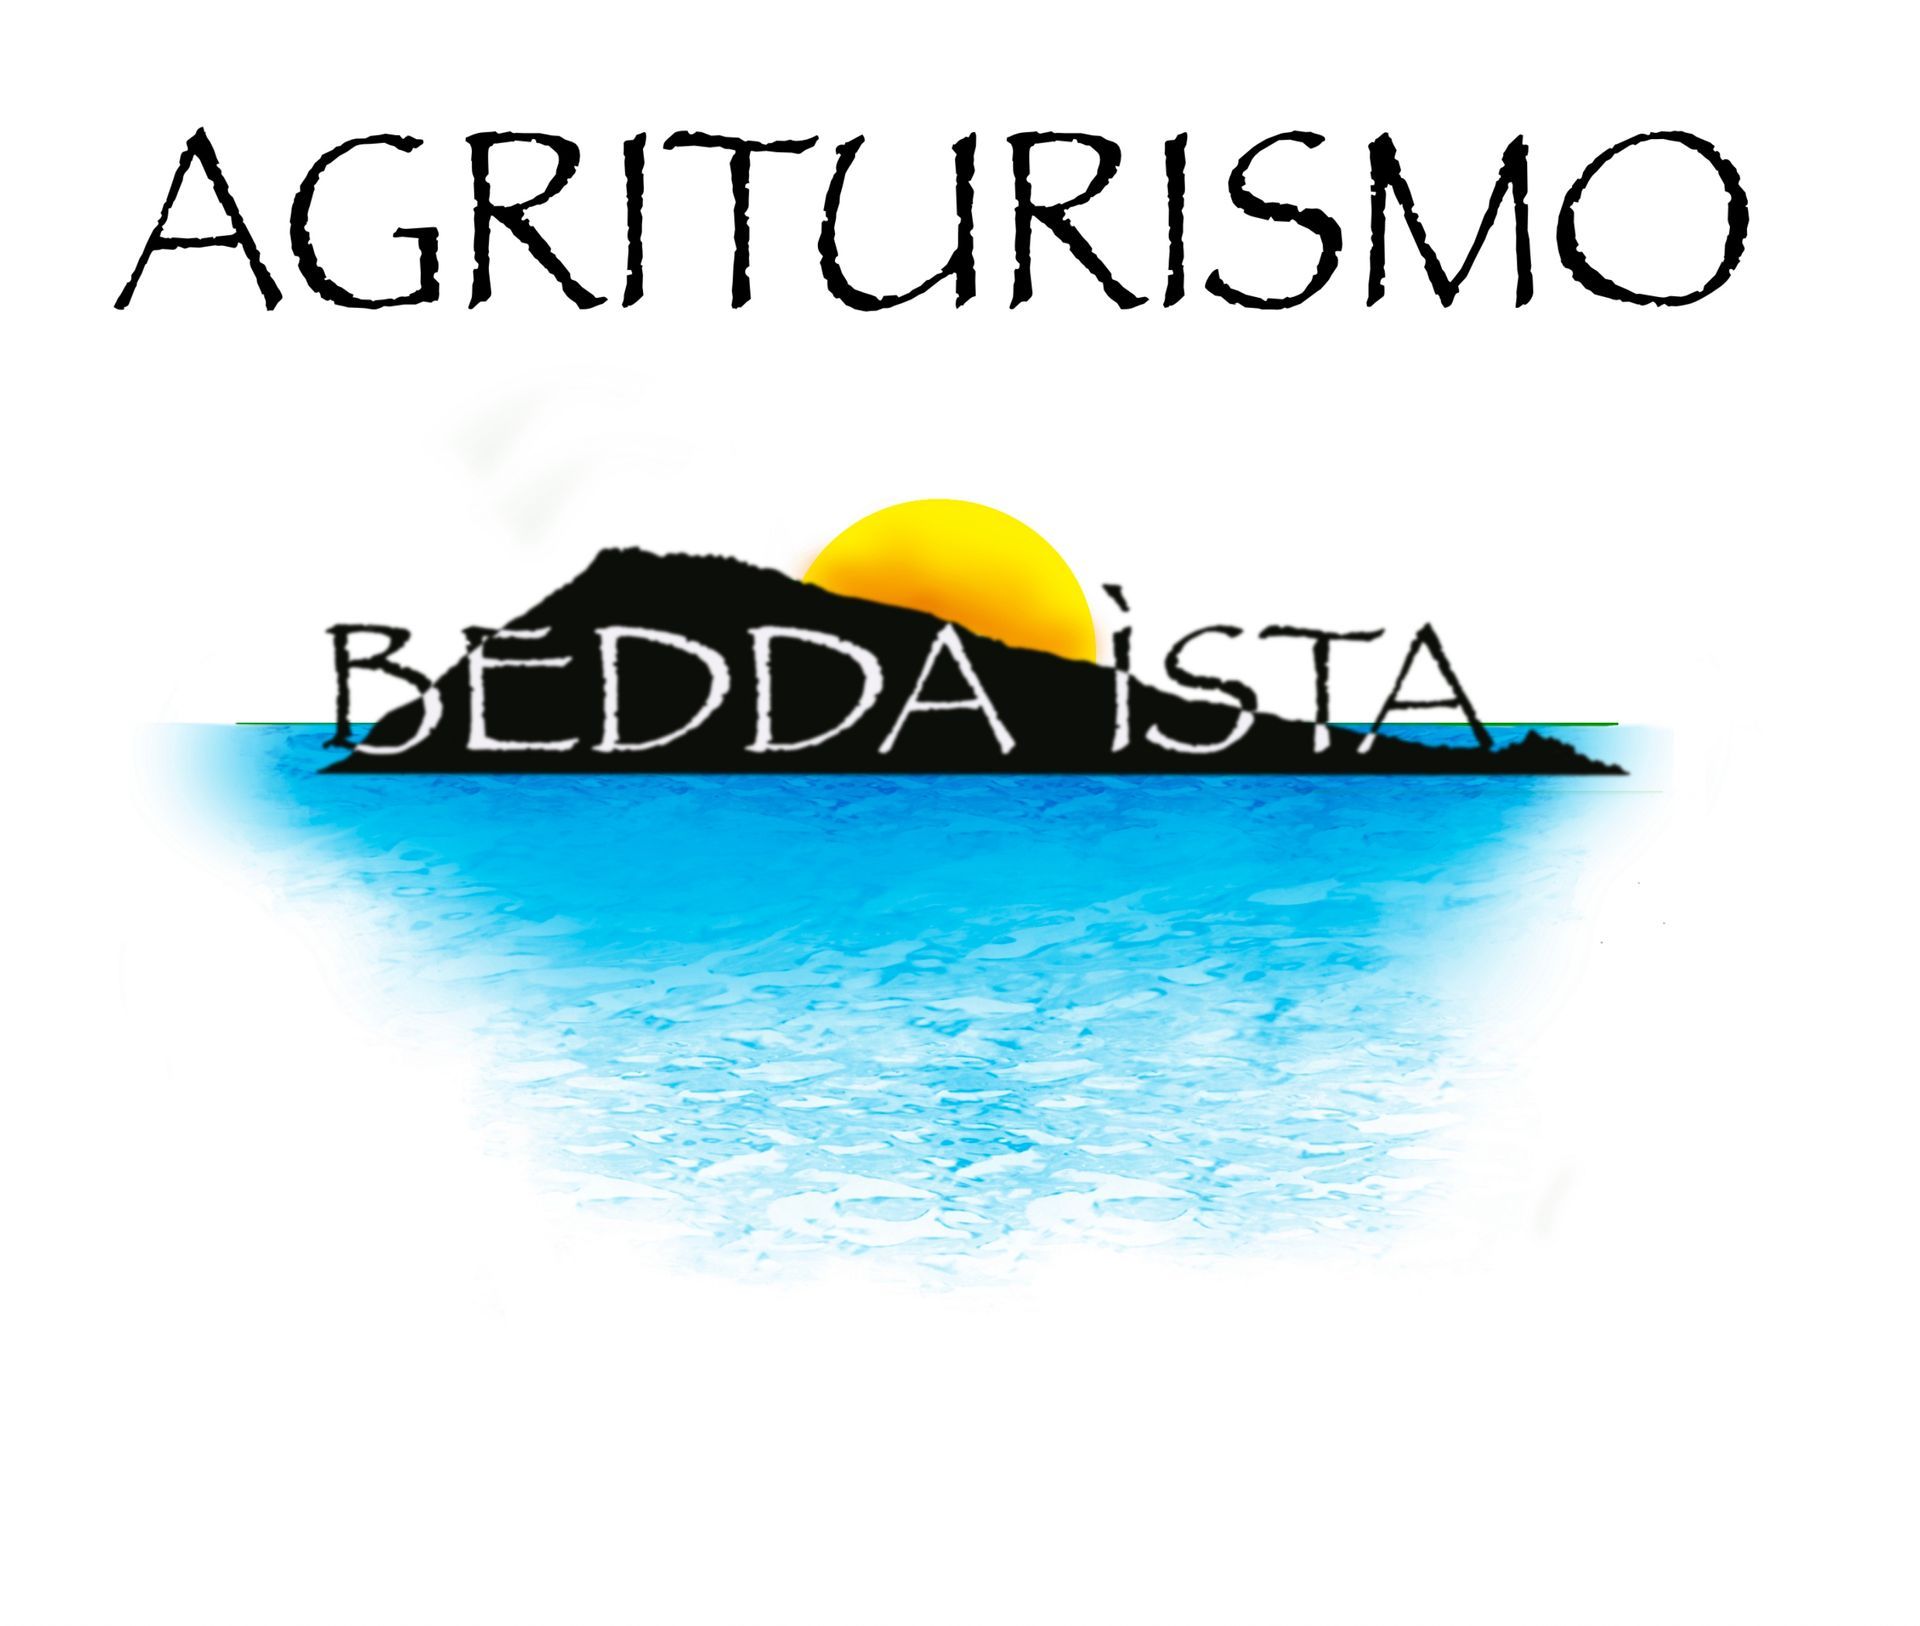 AGRITURISMO BEDDA ISTA - LOGO